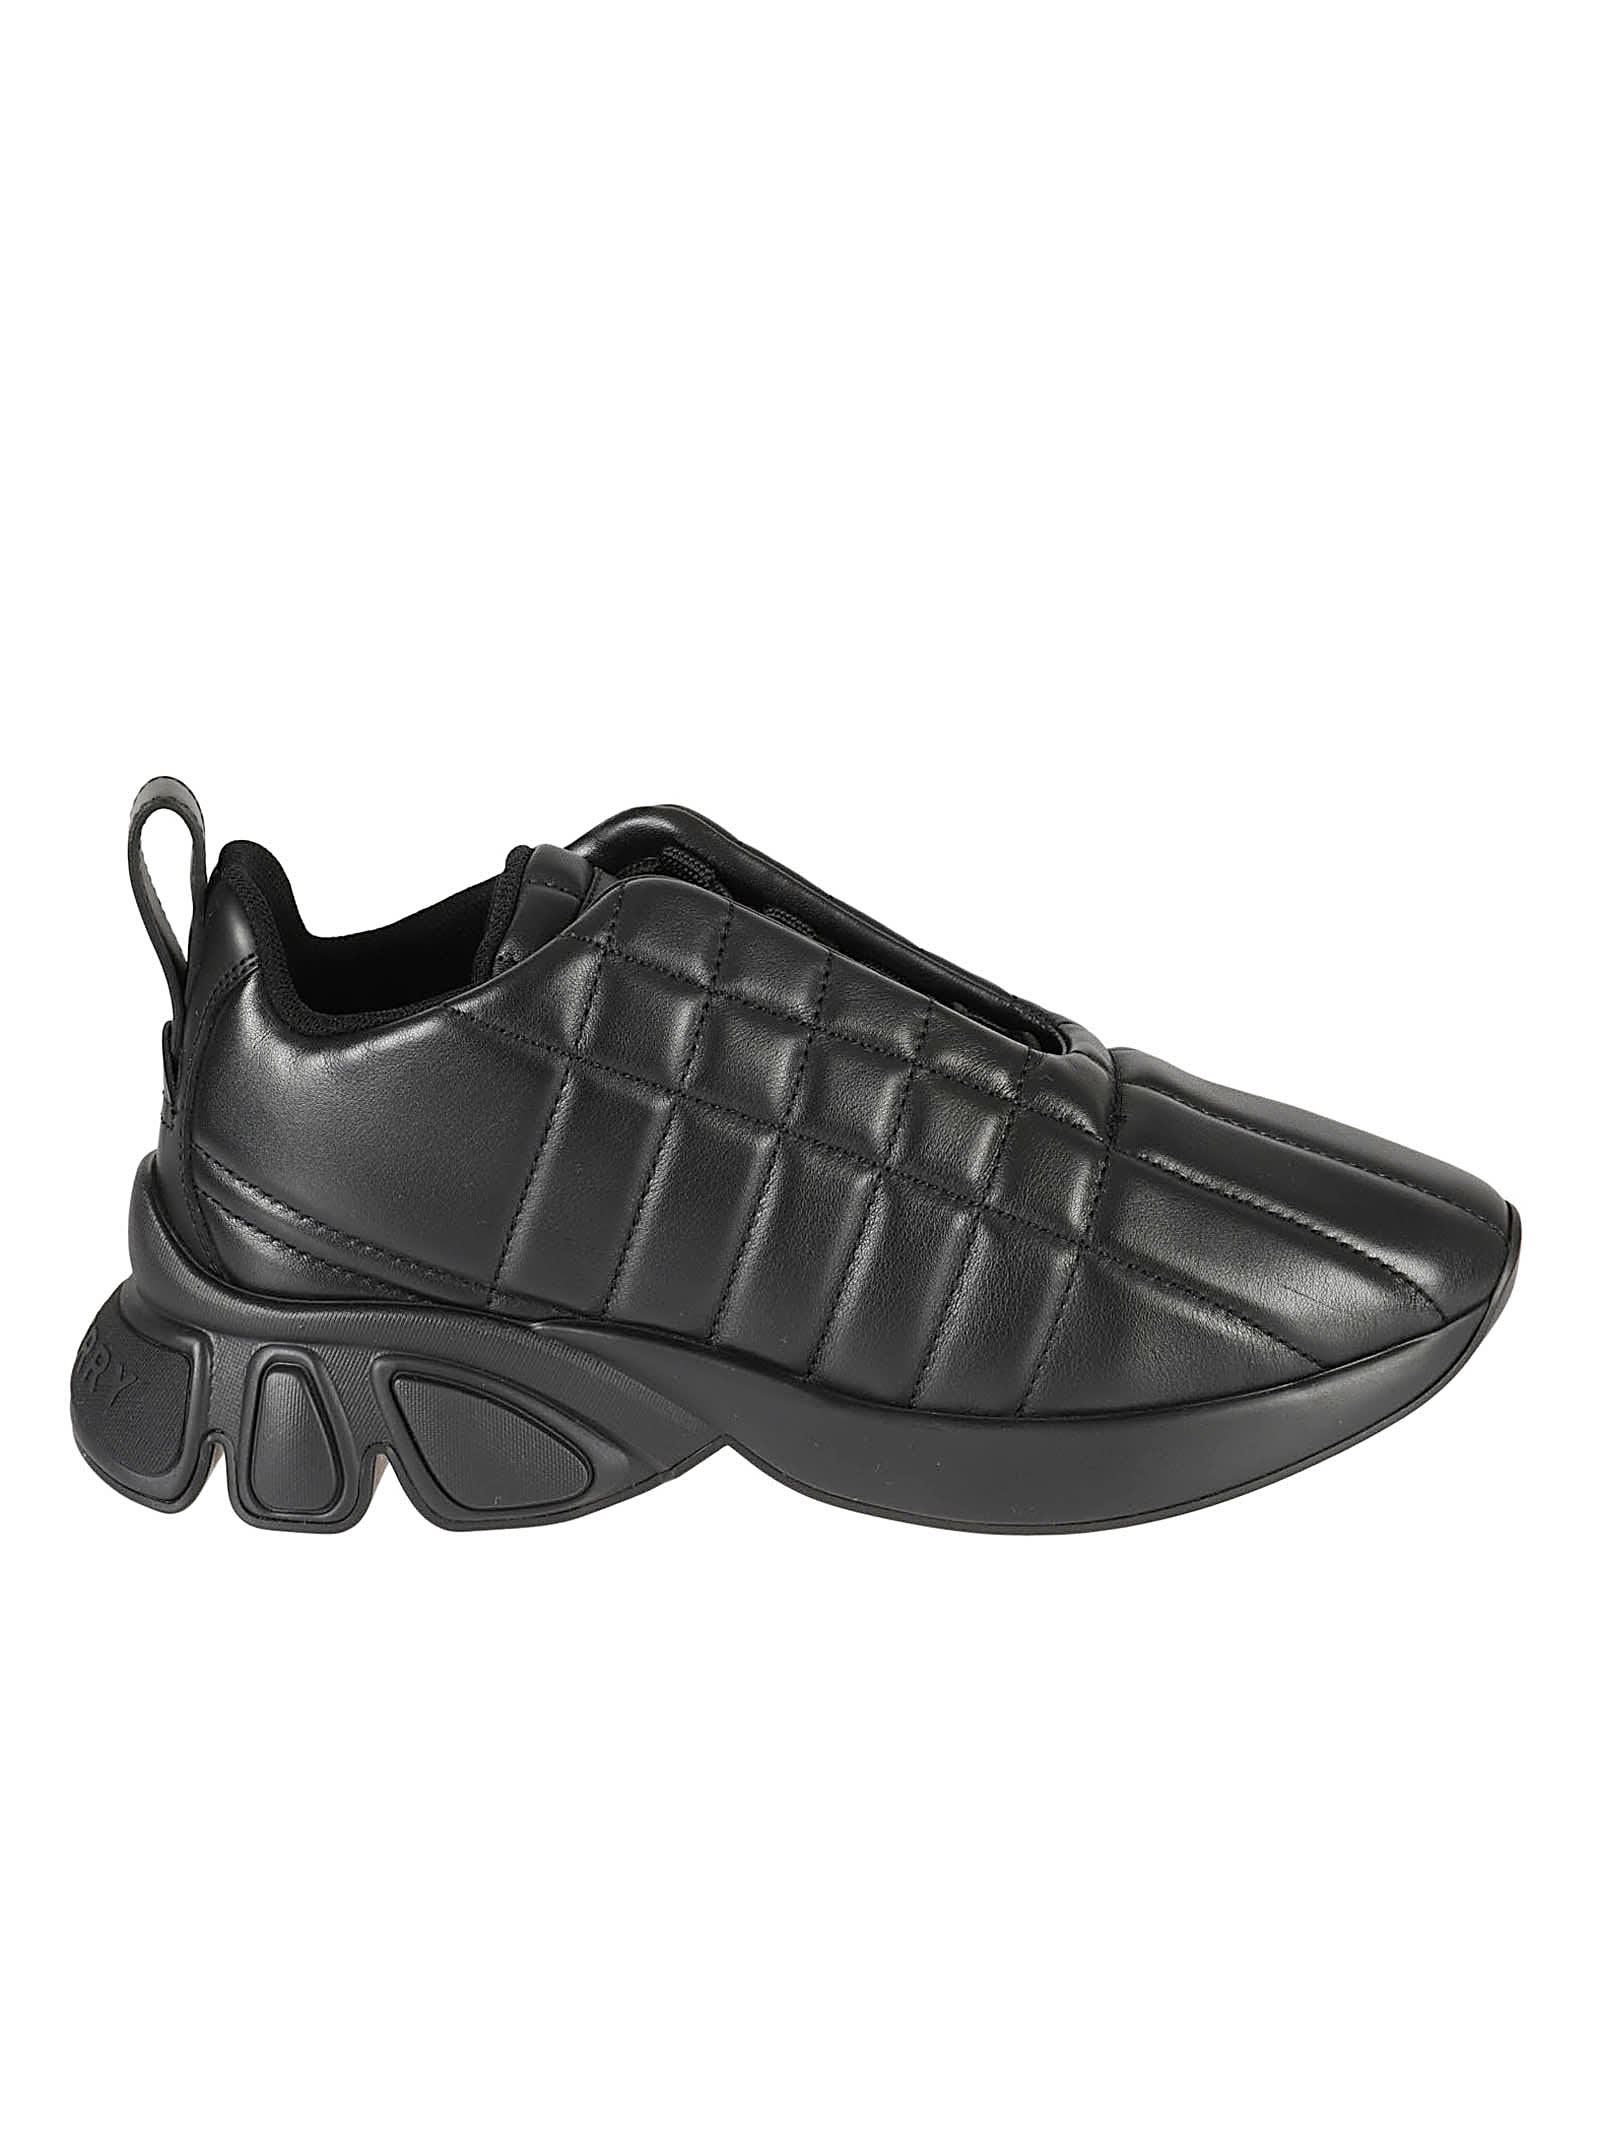 Burberry Axburton Sneakers